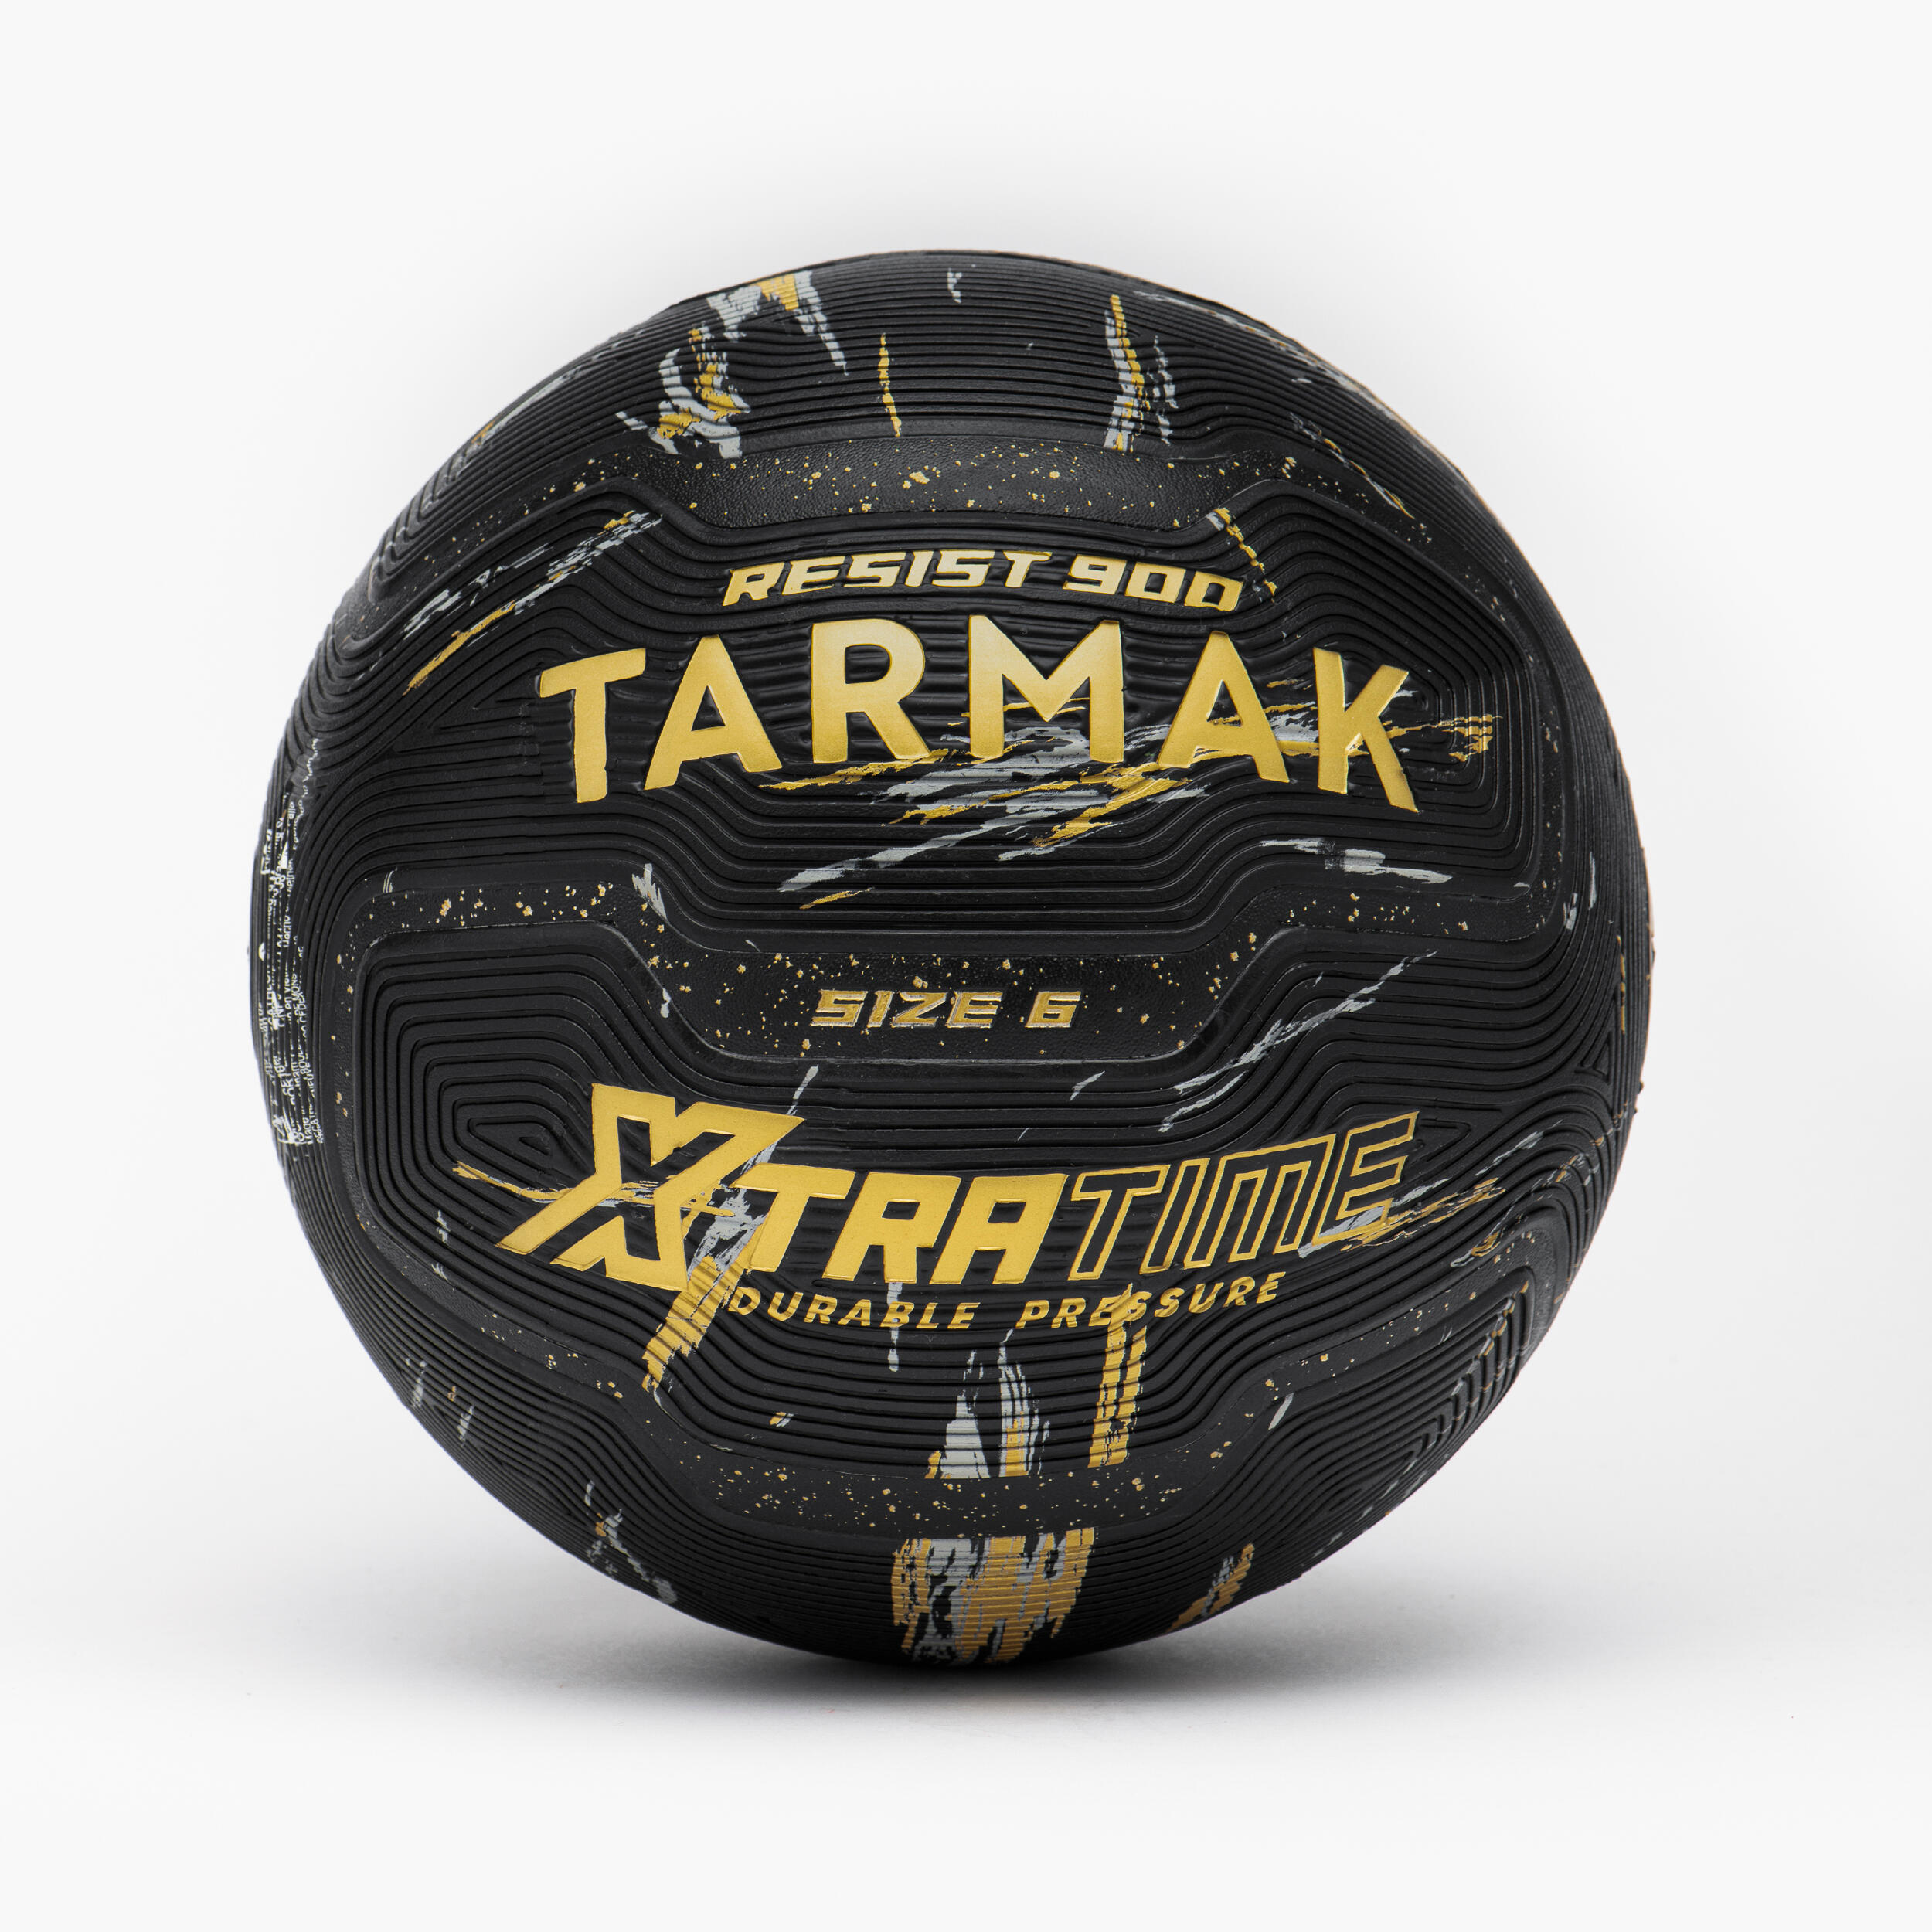 TARMAK Ballon De Basketball Taille 6 - Resist 900 Jaune Noir